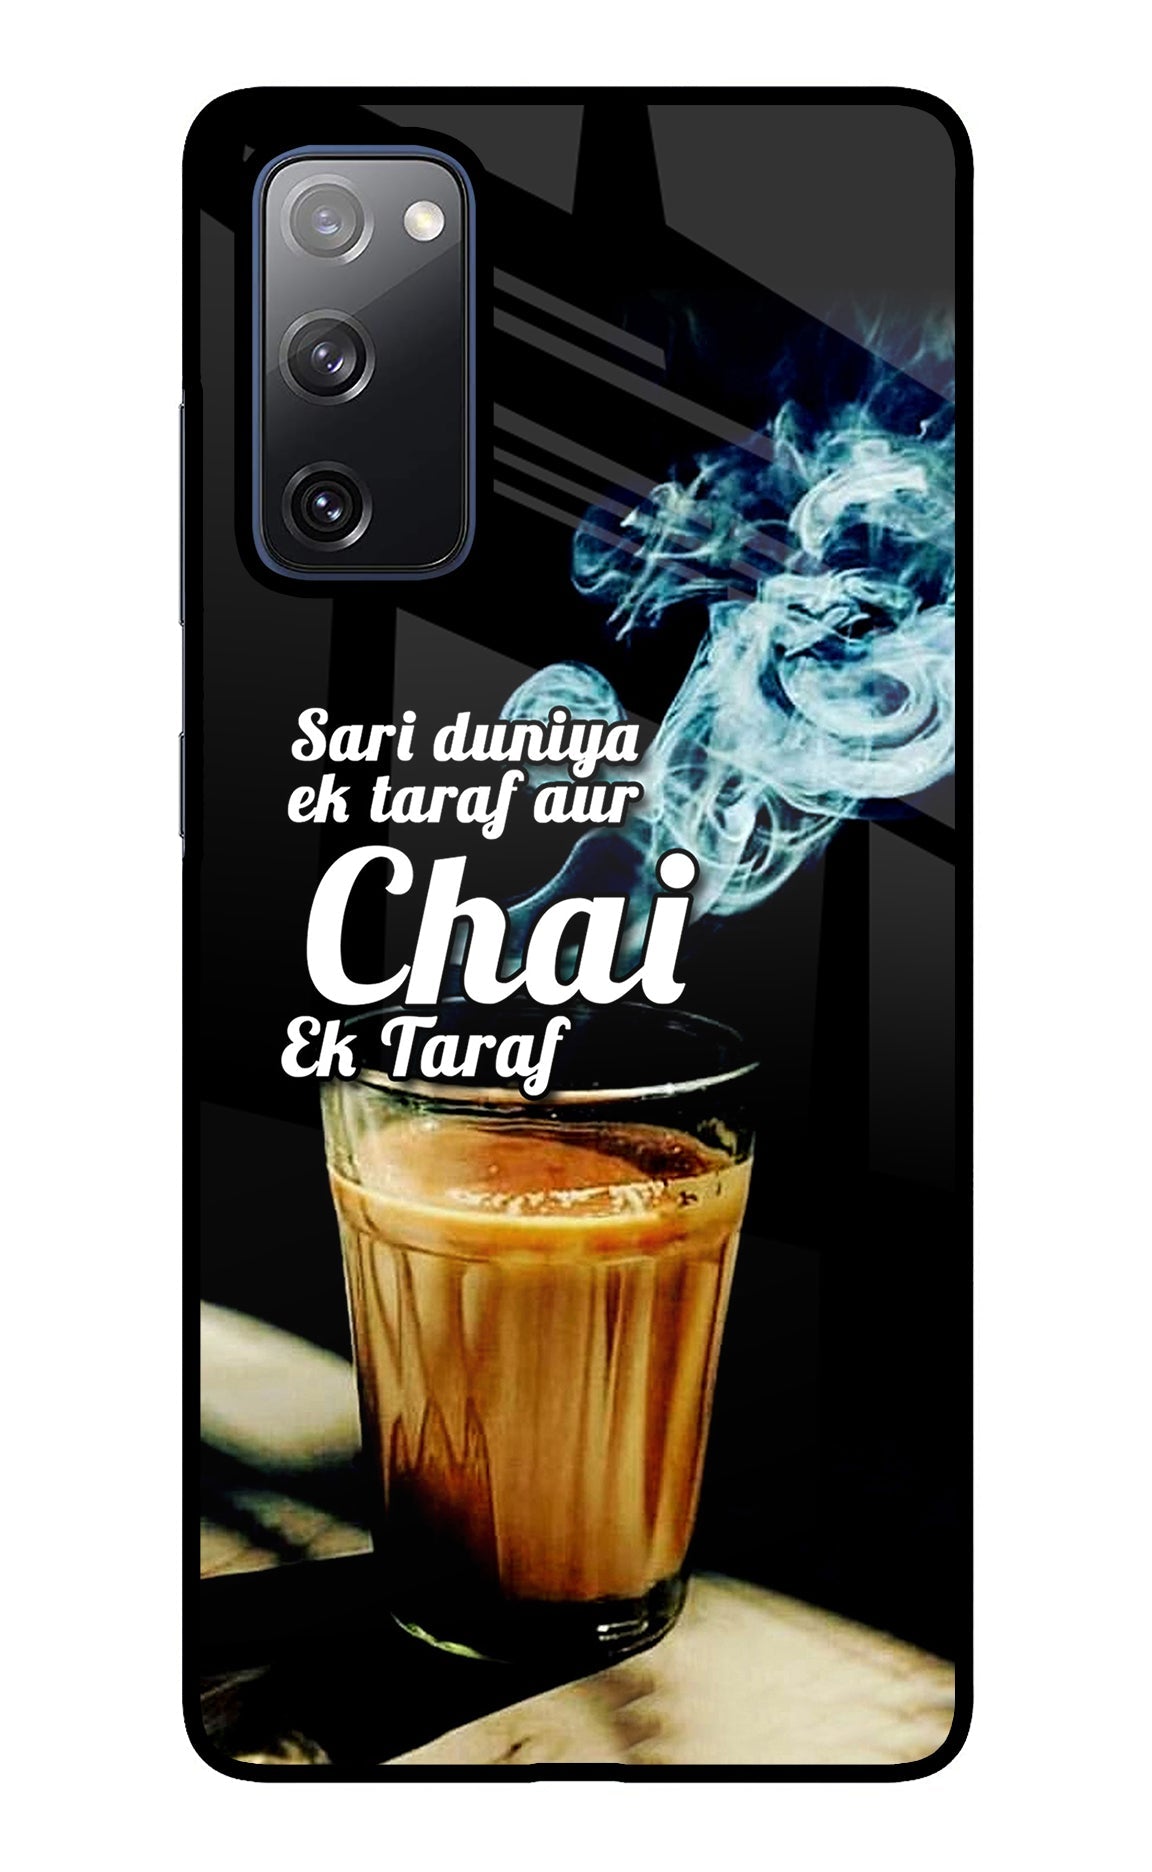 Chai Ek Taraf Quote Samsung S20 FE Glass Case